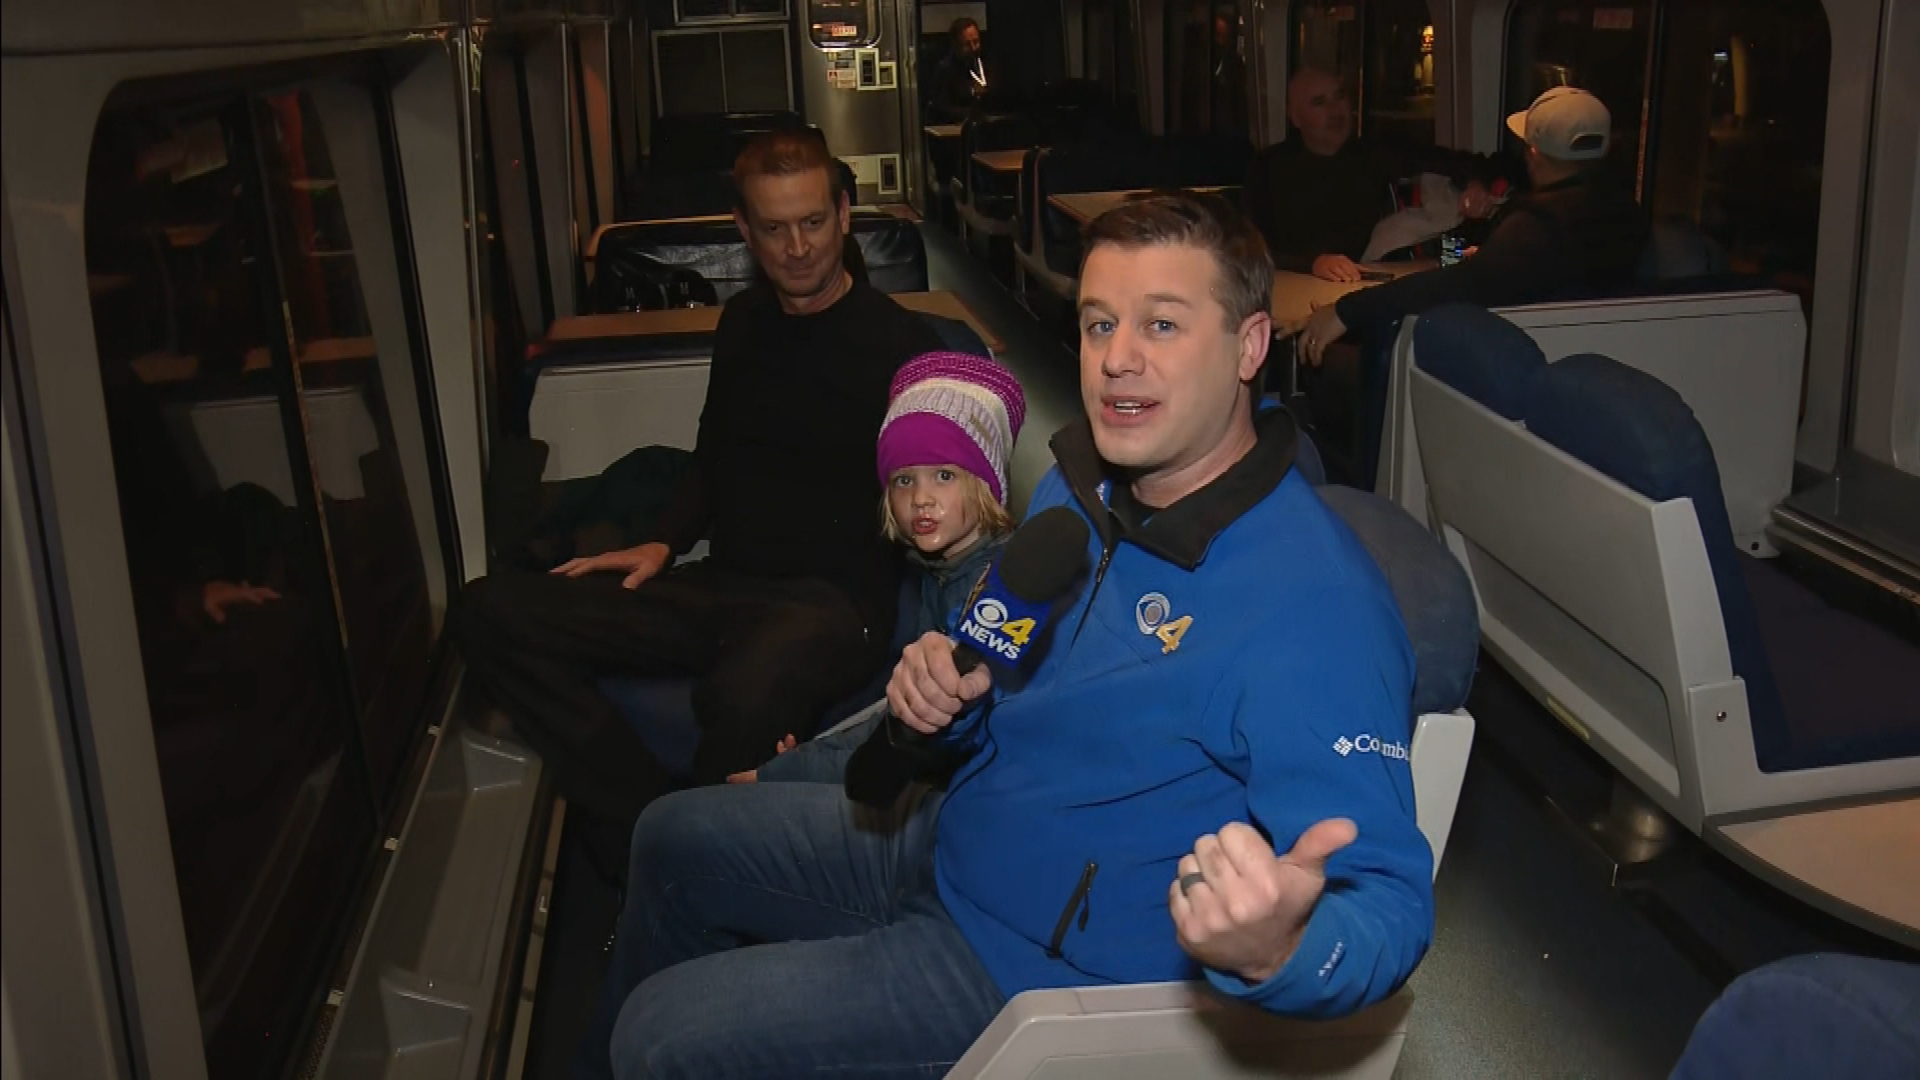 CBS4's Ashton Altieri interviews a family on the ski train on Friday morning.